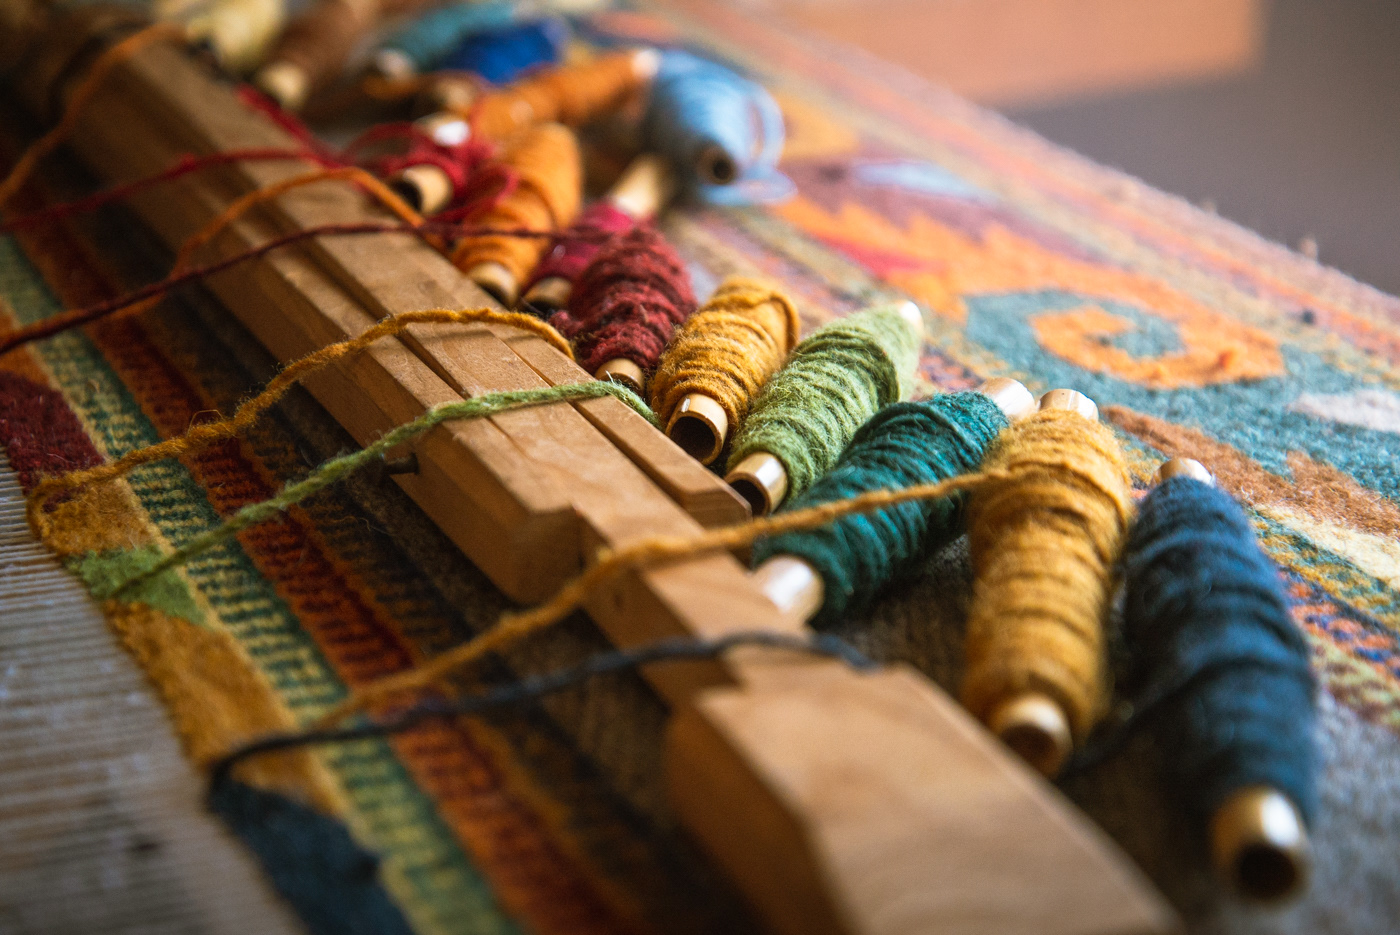 oaxaca mexico textile handcraft artesania tapete tapestry Rug Travel Workshop